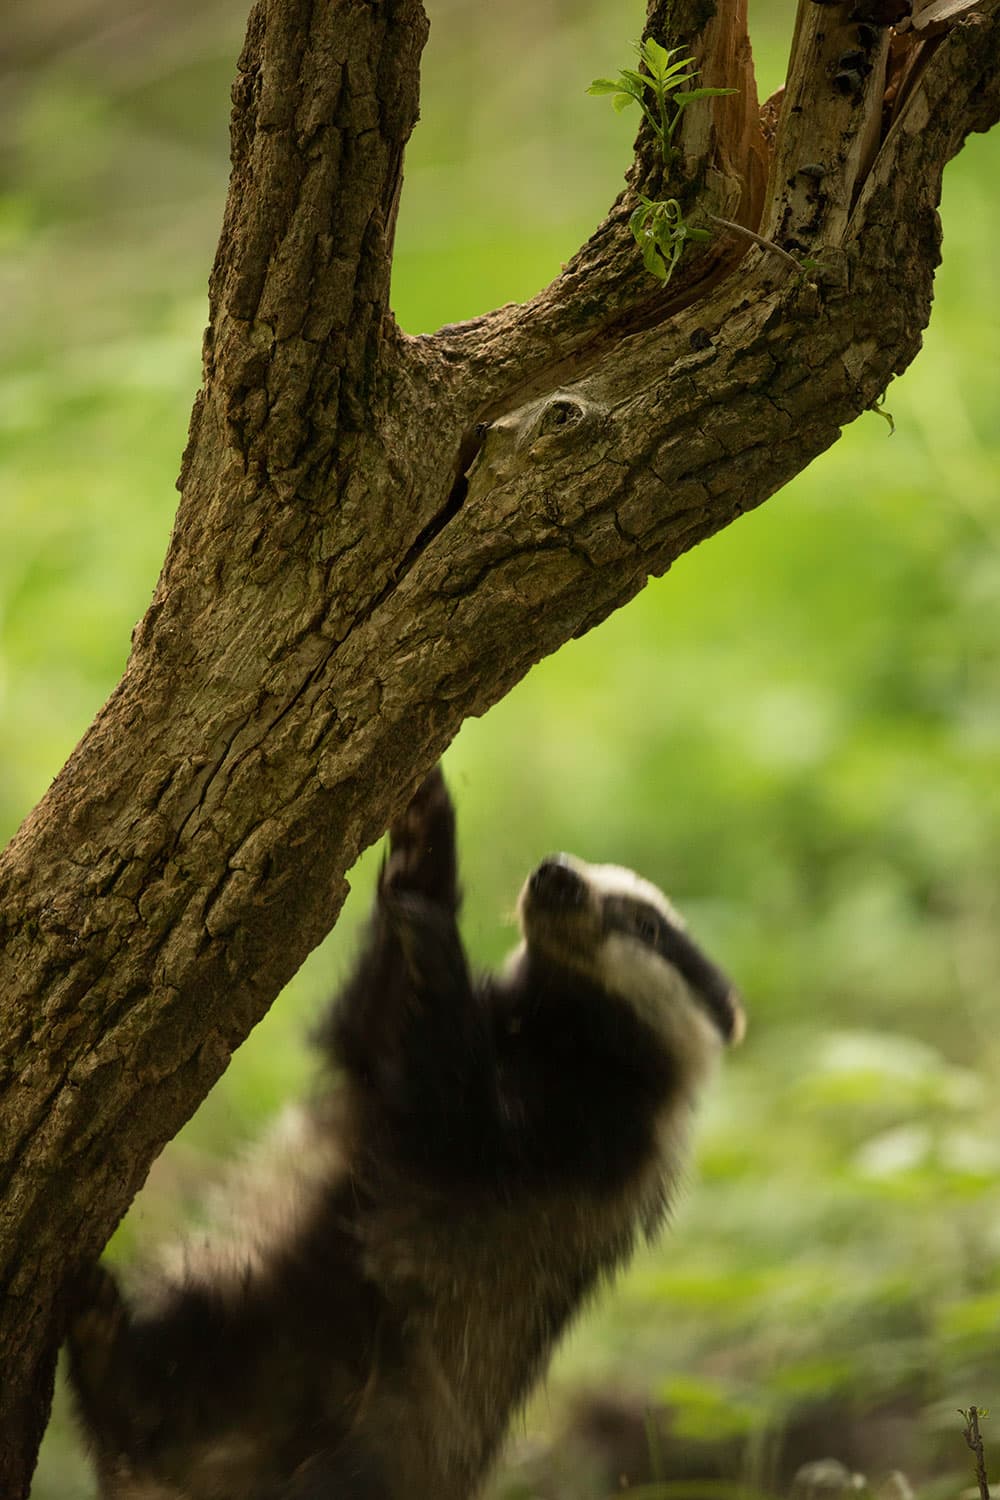 Low light shot of a badger climbing a tree